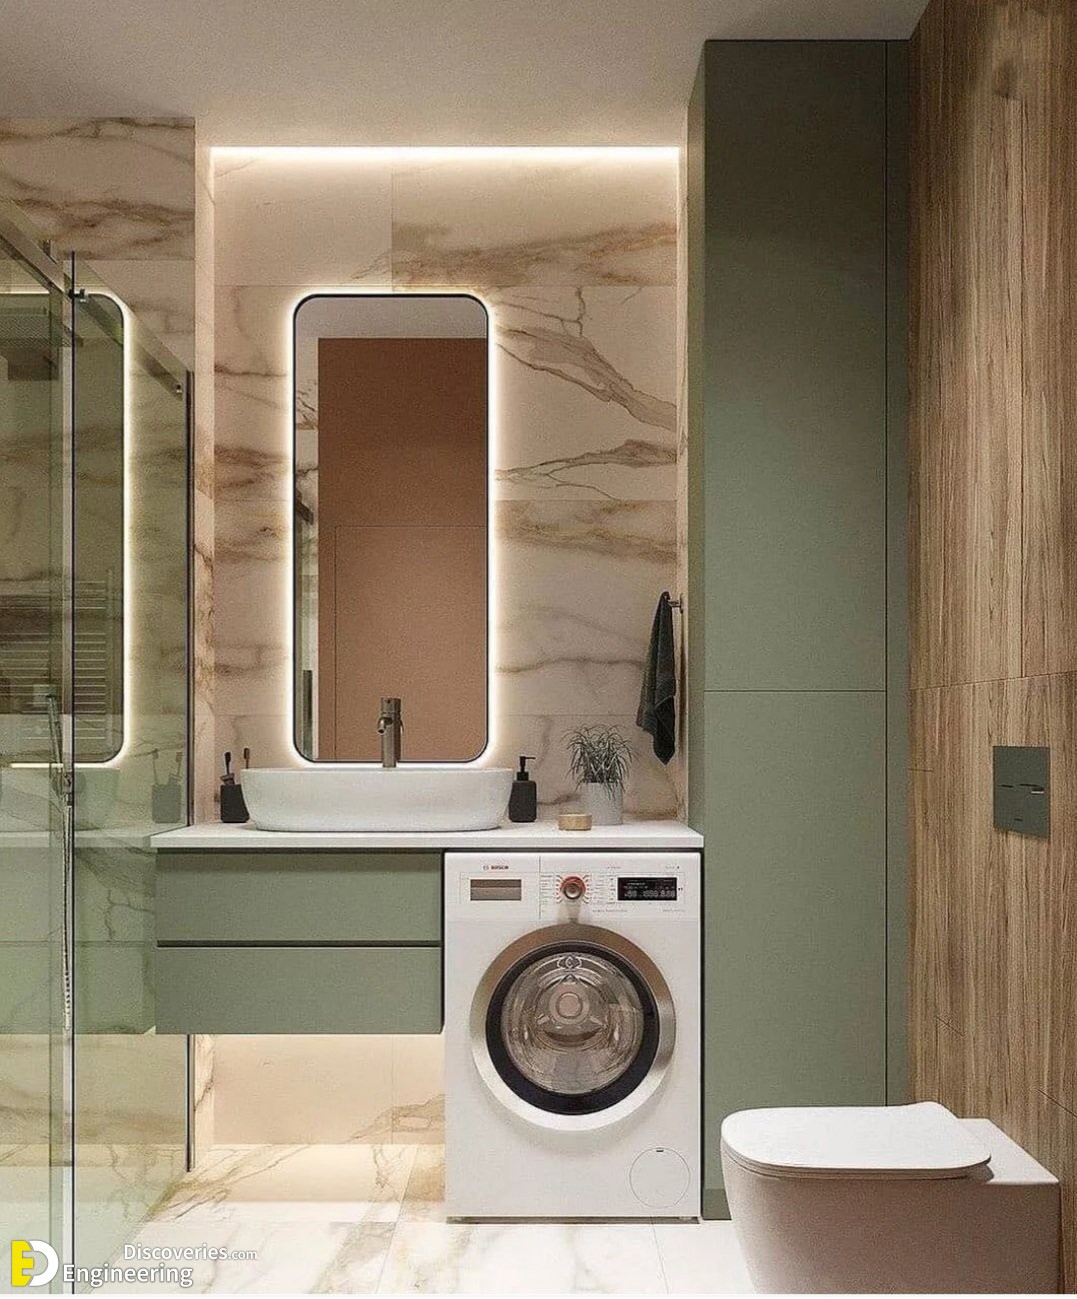 40 Bathroom Designs With Washing Machines - DigsDigs